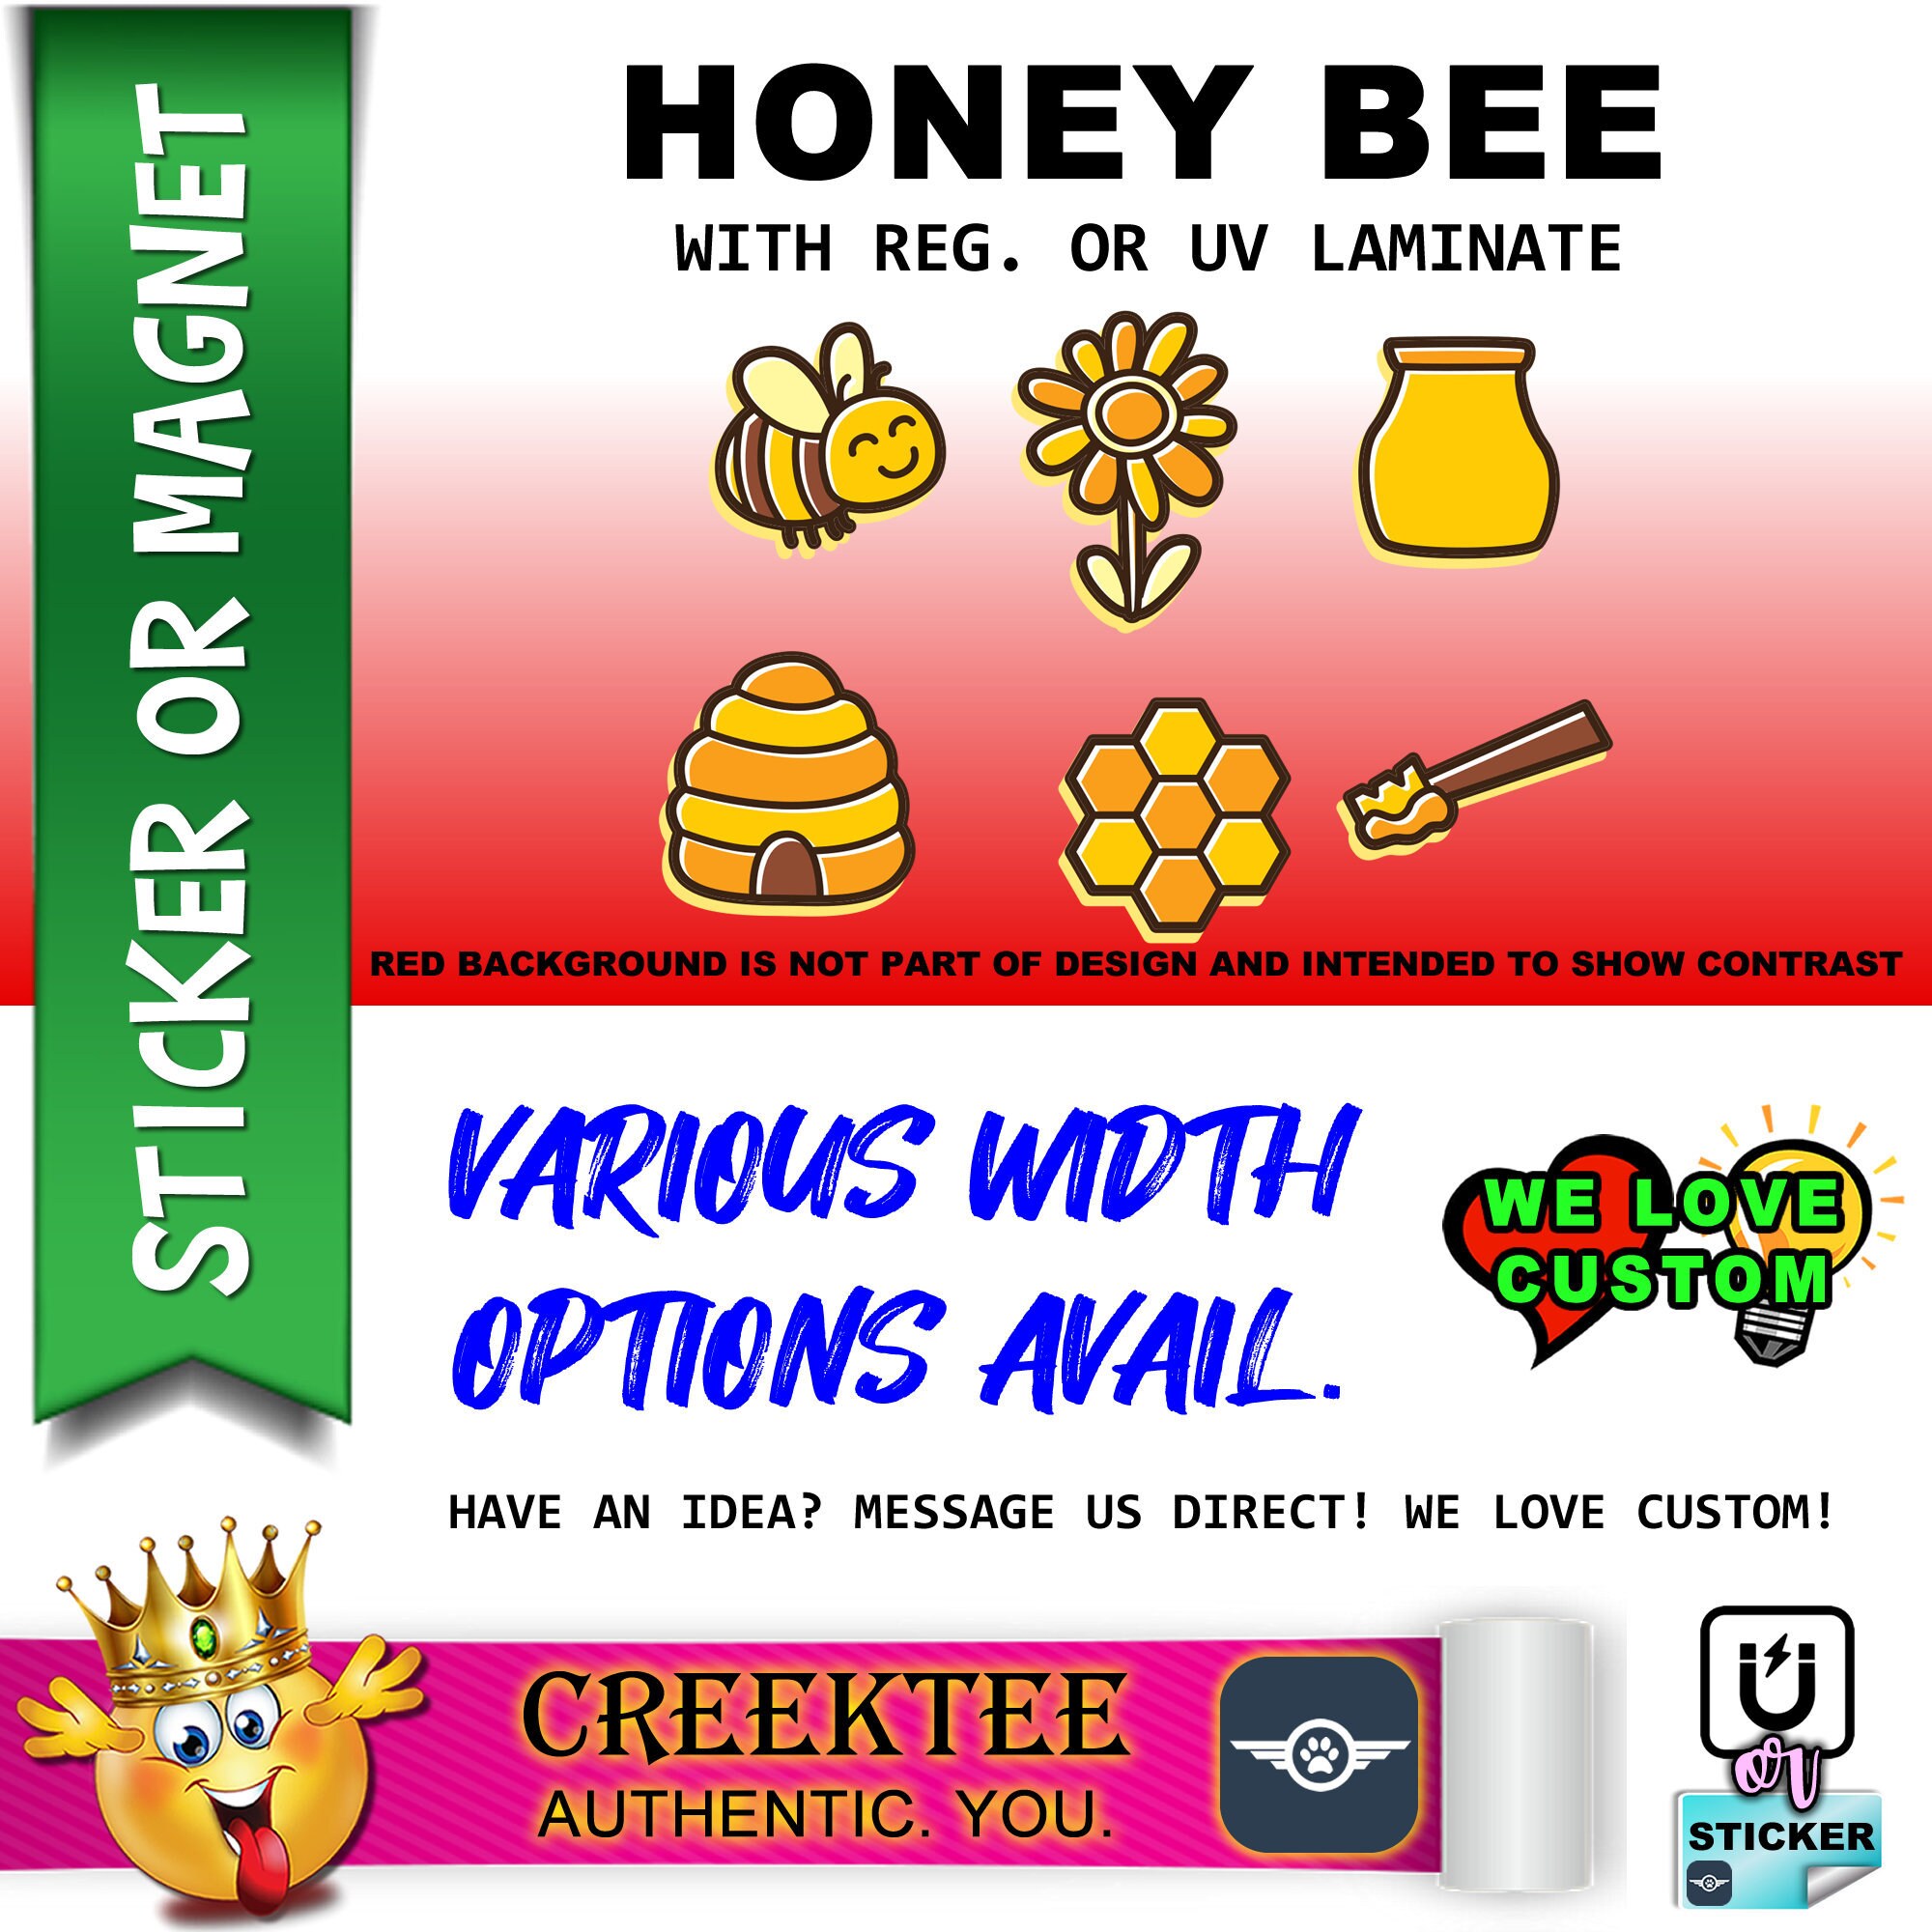 6 Honey Bee Magnet or Sticker Set, 2x2 + various wide Vinyl Sticker, Laminate, UV Laminate and Magnet options!